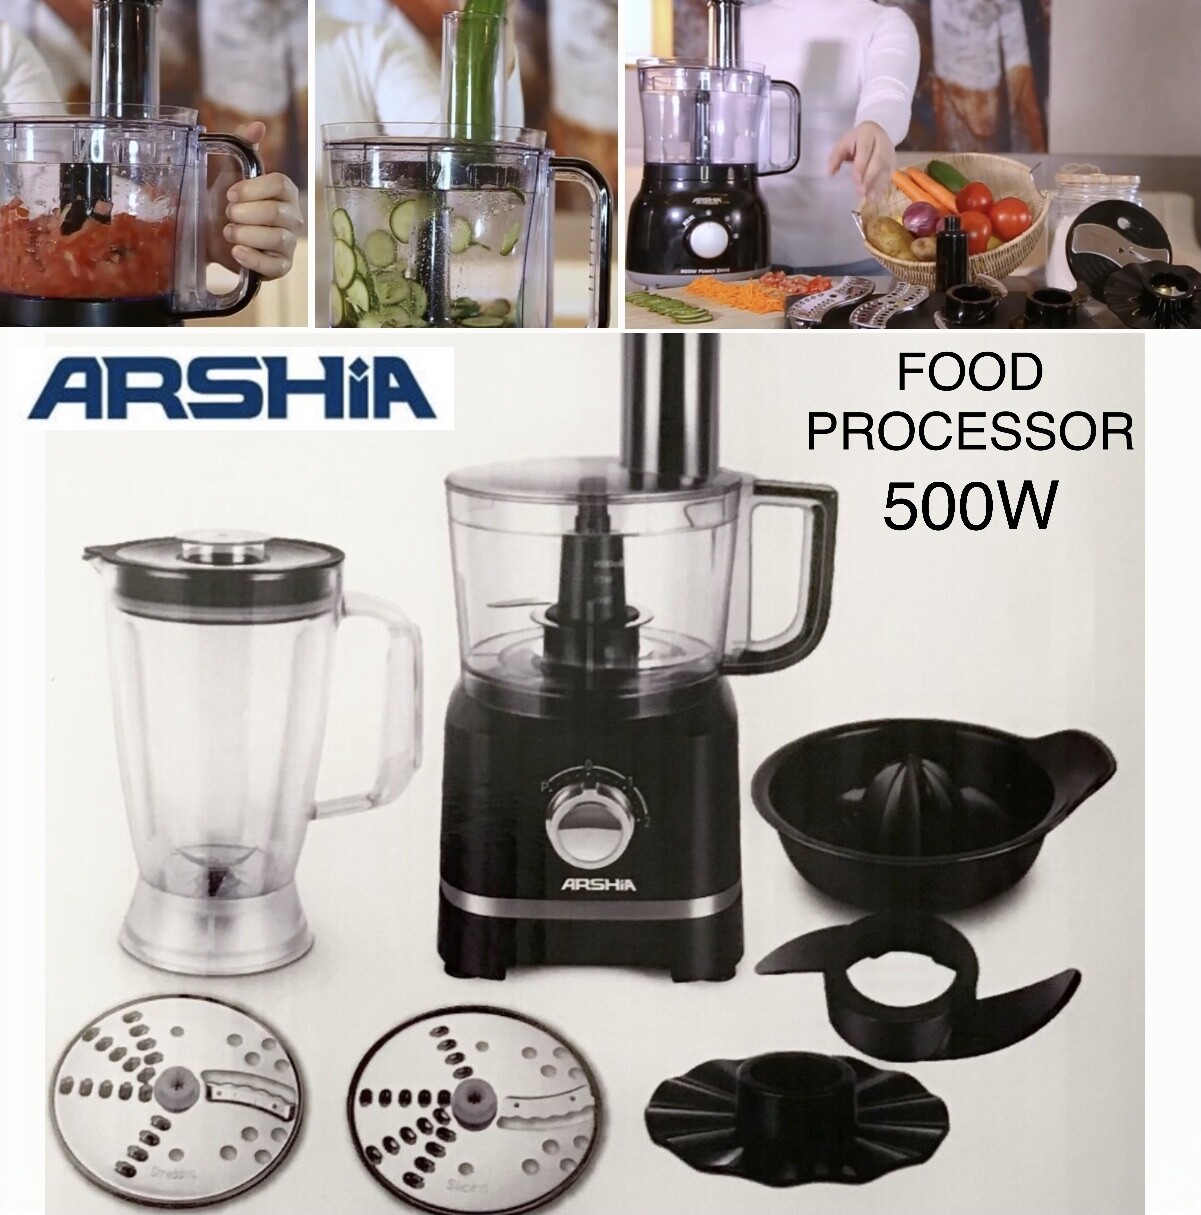 ARSHIA Food Processor